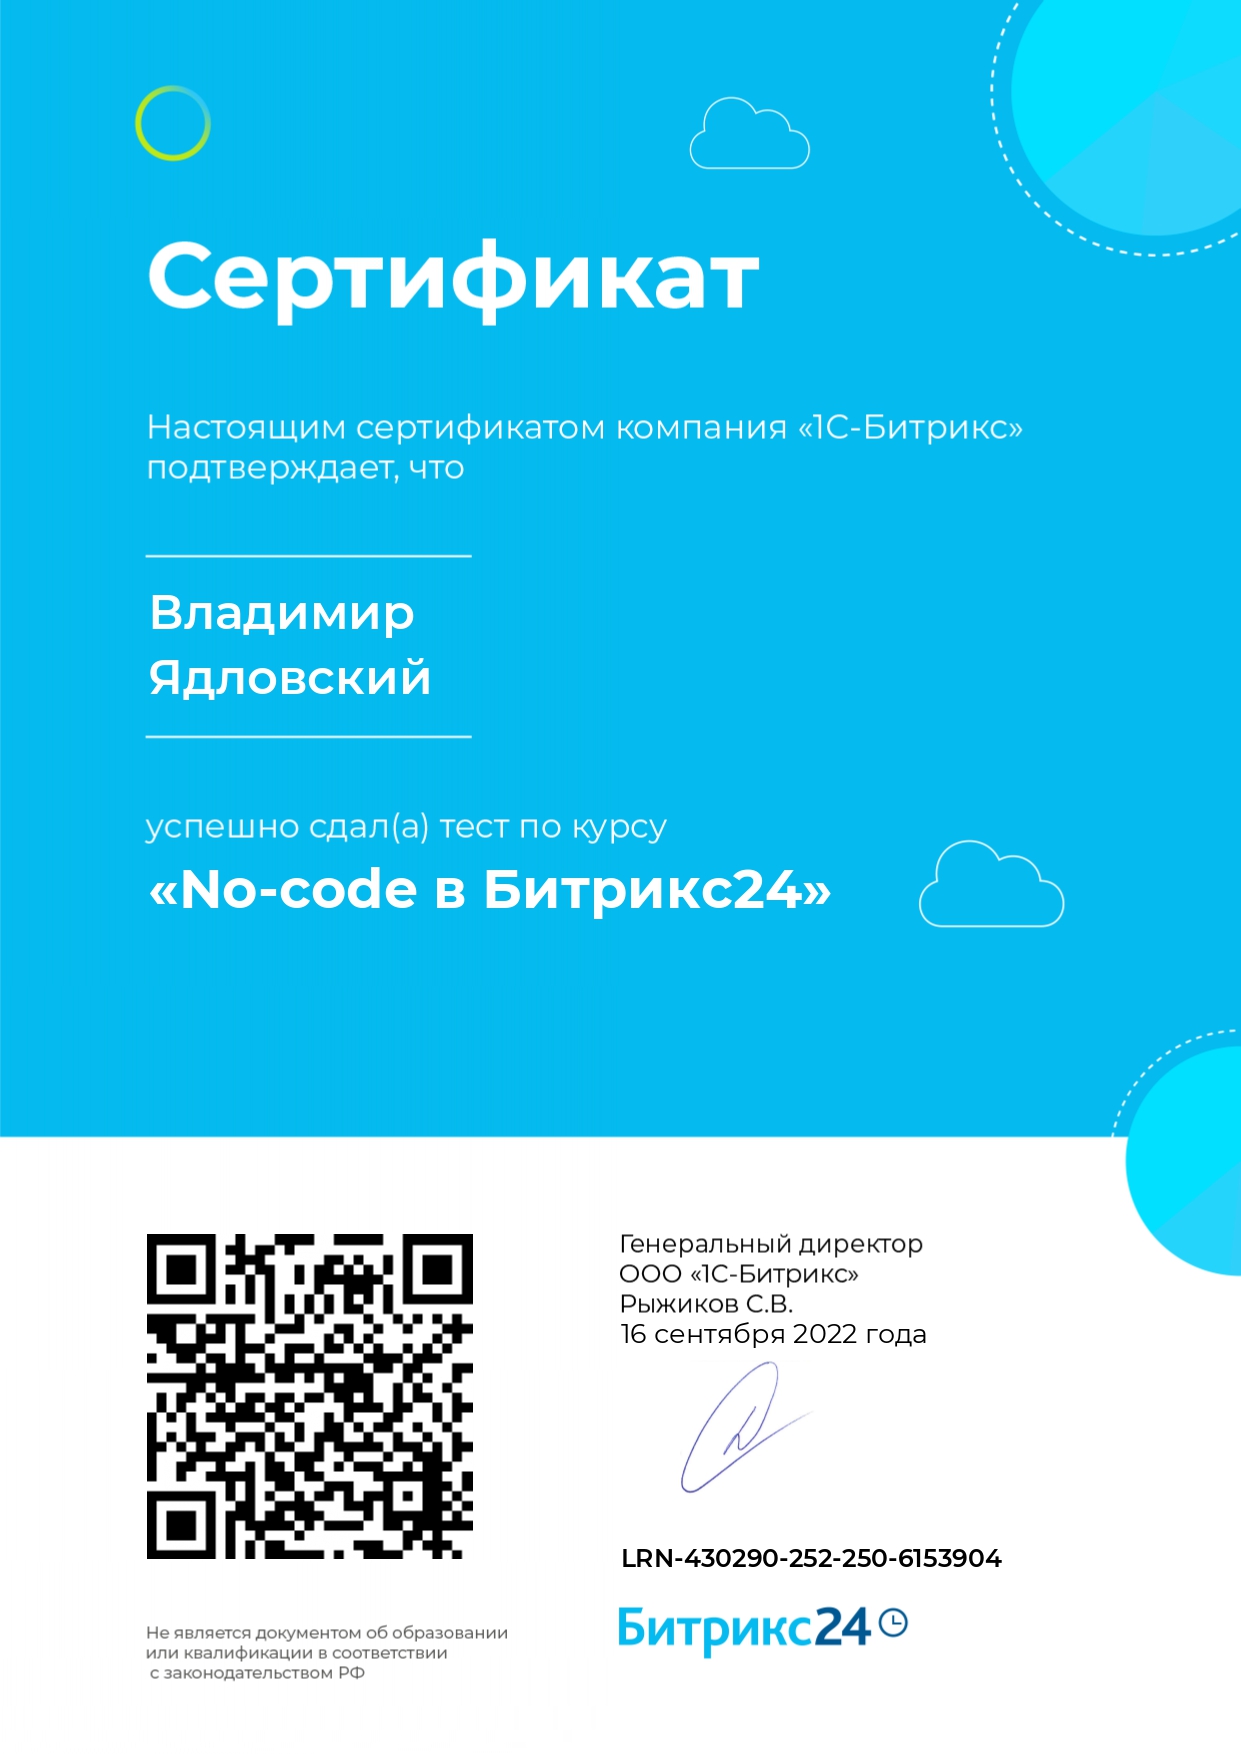 crm-sertificate